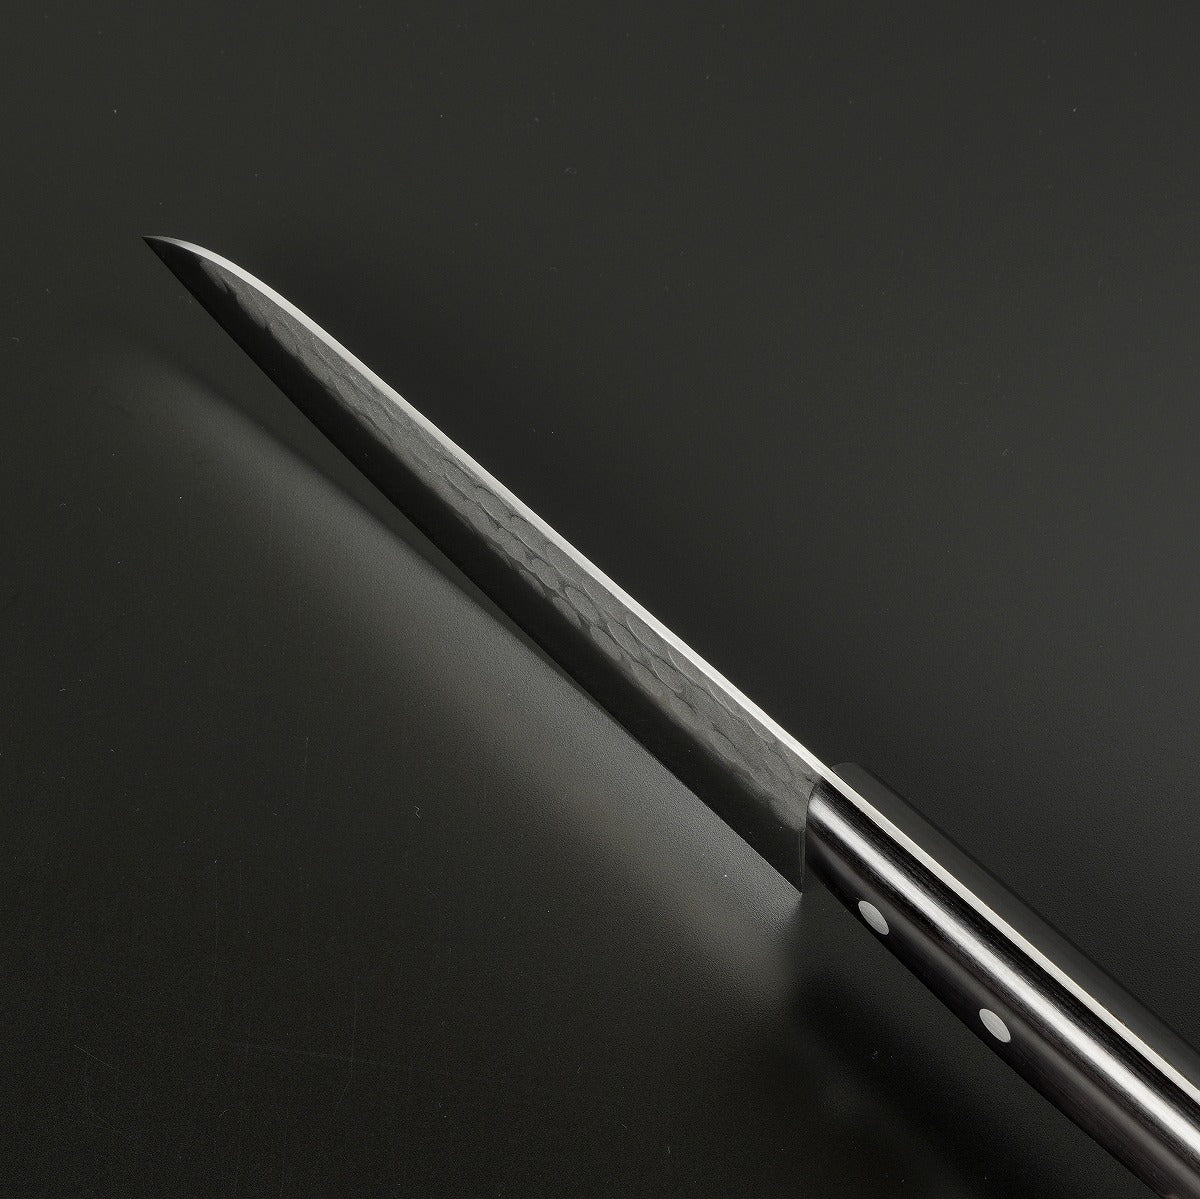 HONMAMON 三德刀 (多用途廚刀) 青紙鋼2號, 梨地槌目, 170mm